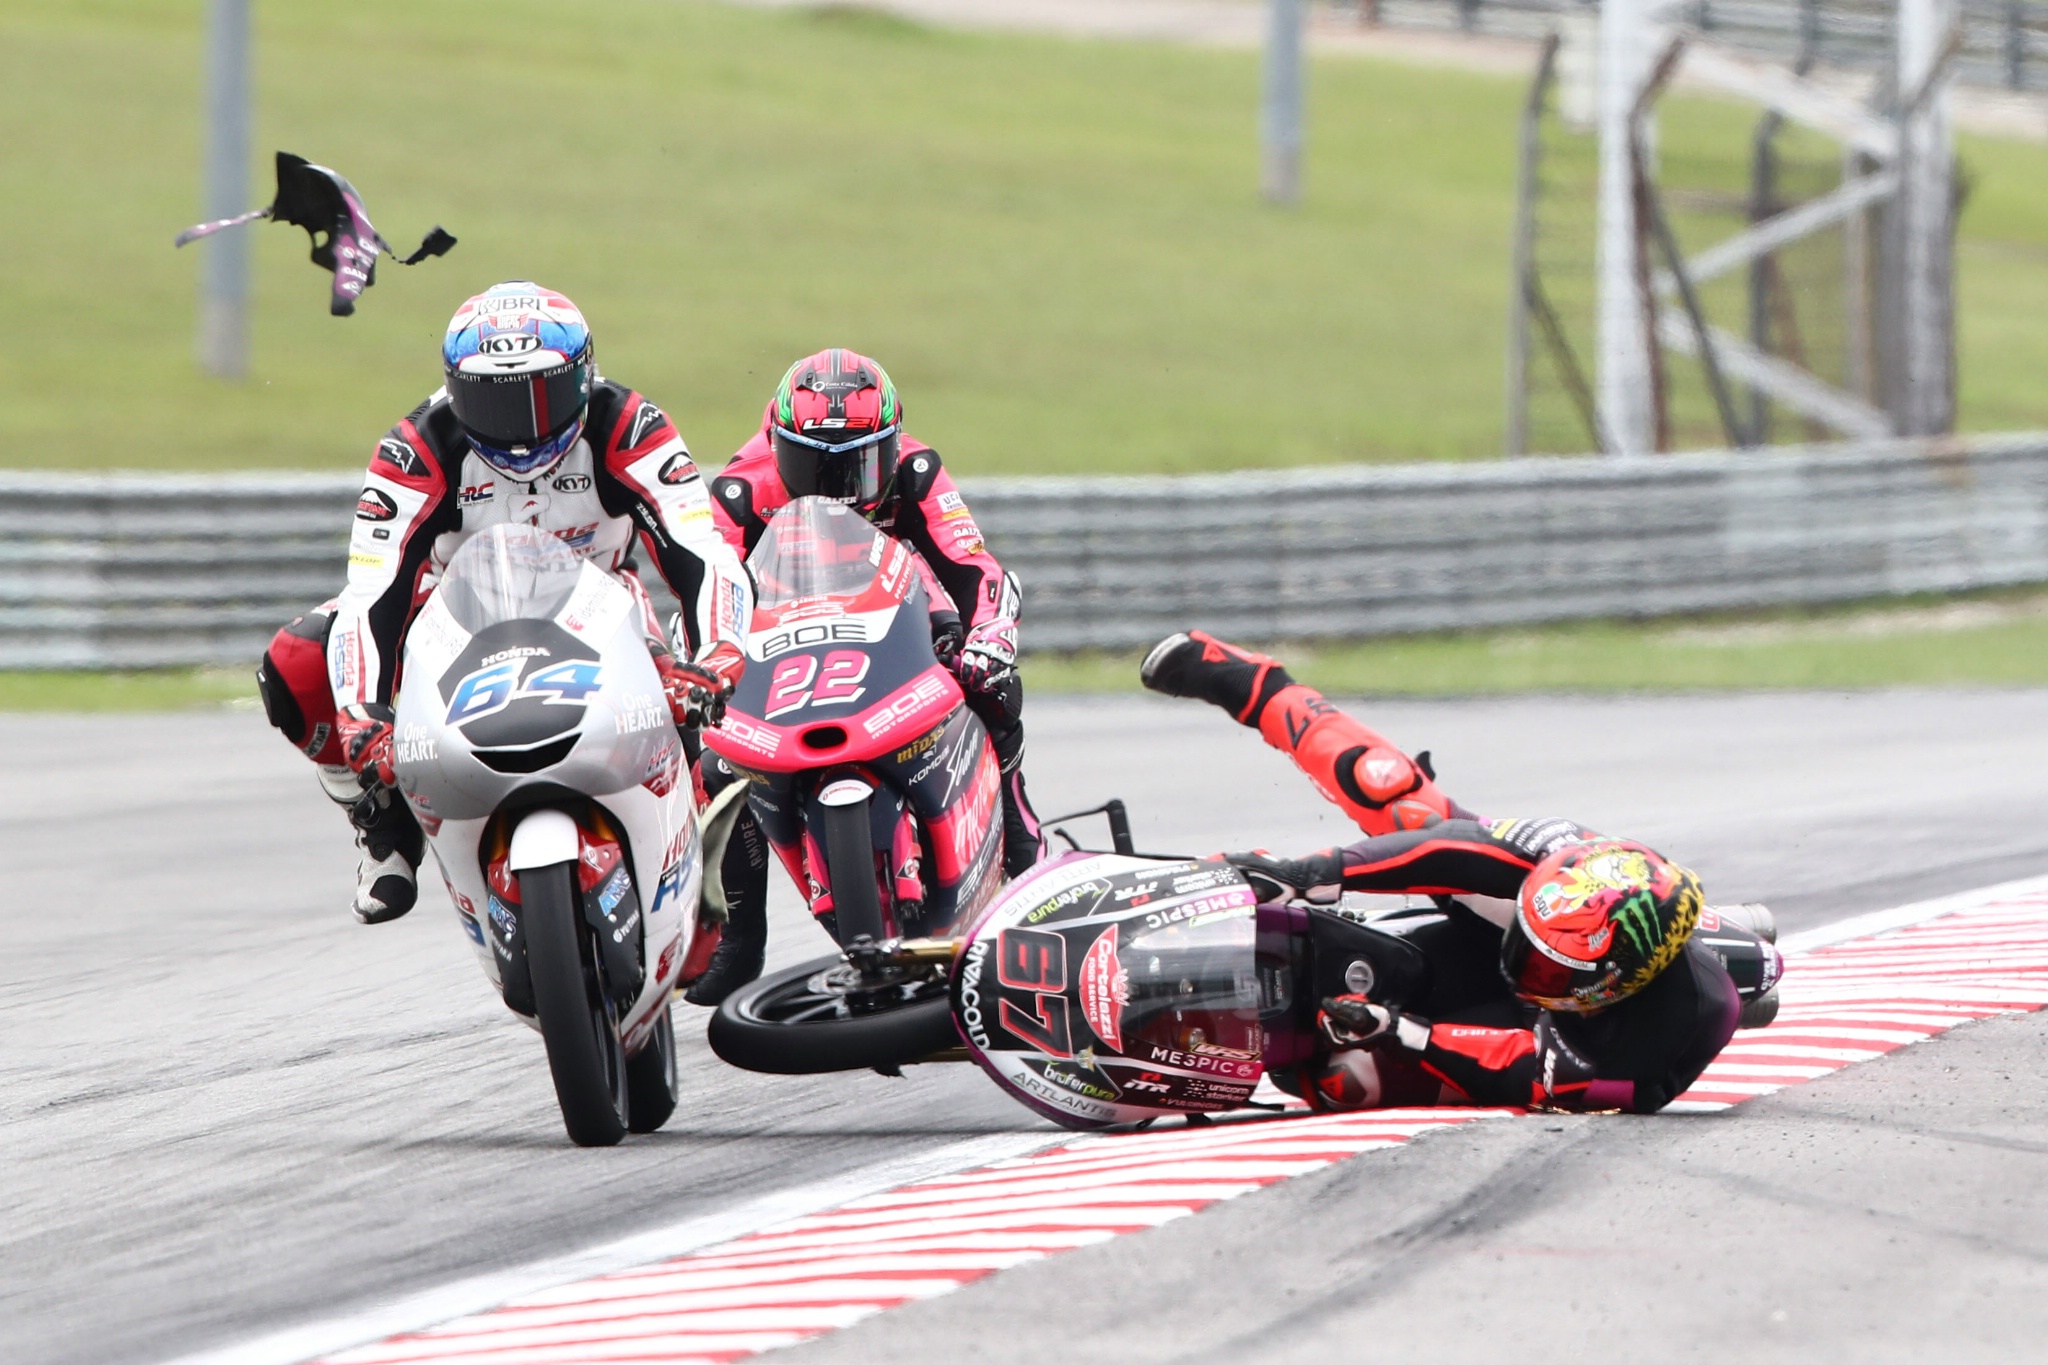 Alberto Surra crash, Moto3 race, Malaysian MotoGP, 23 October